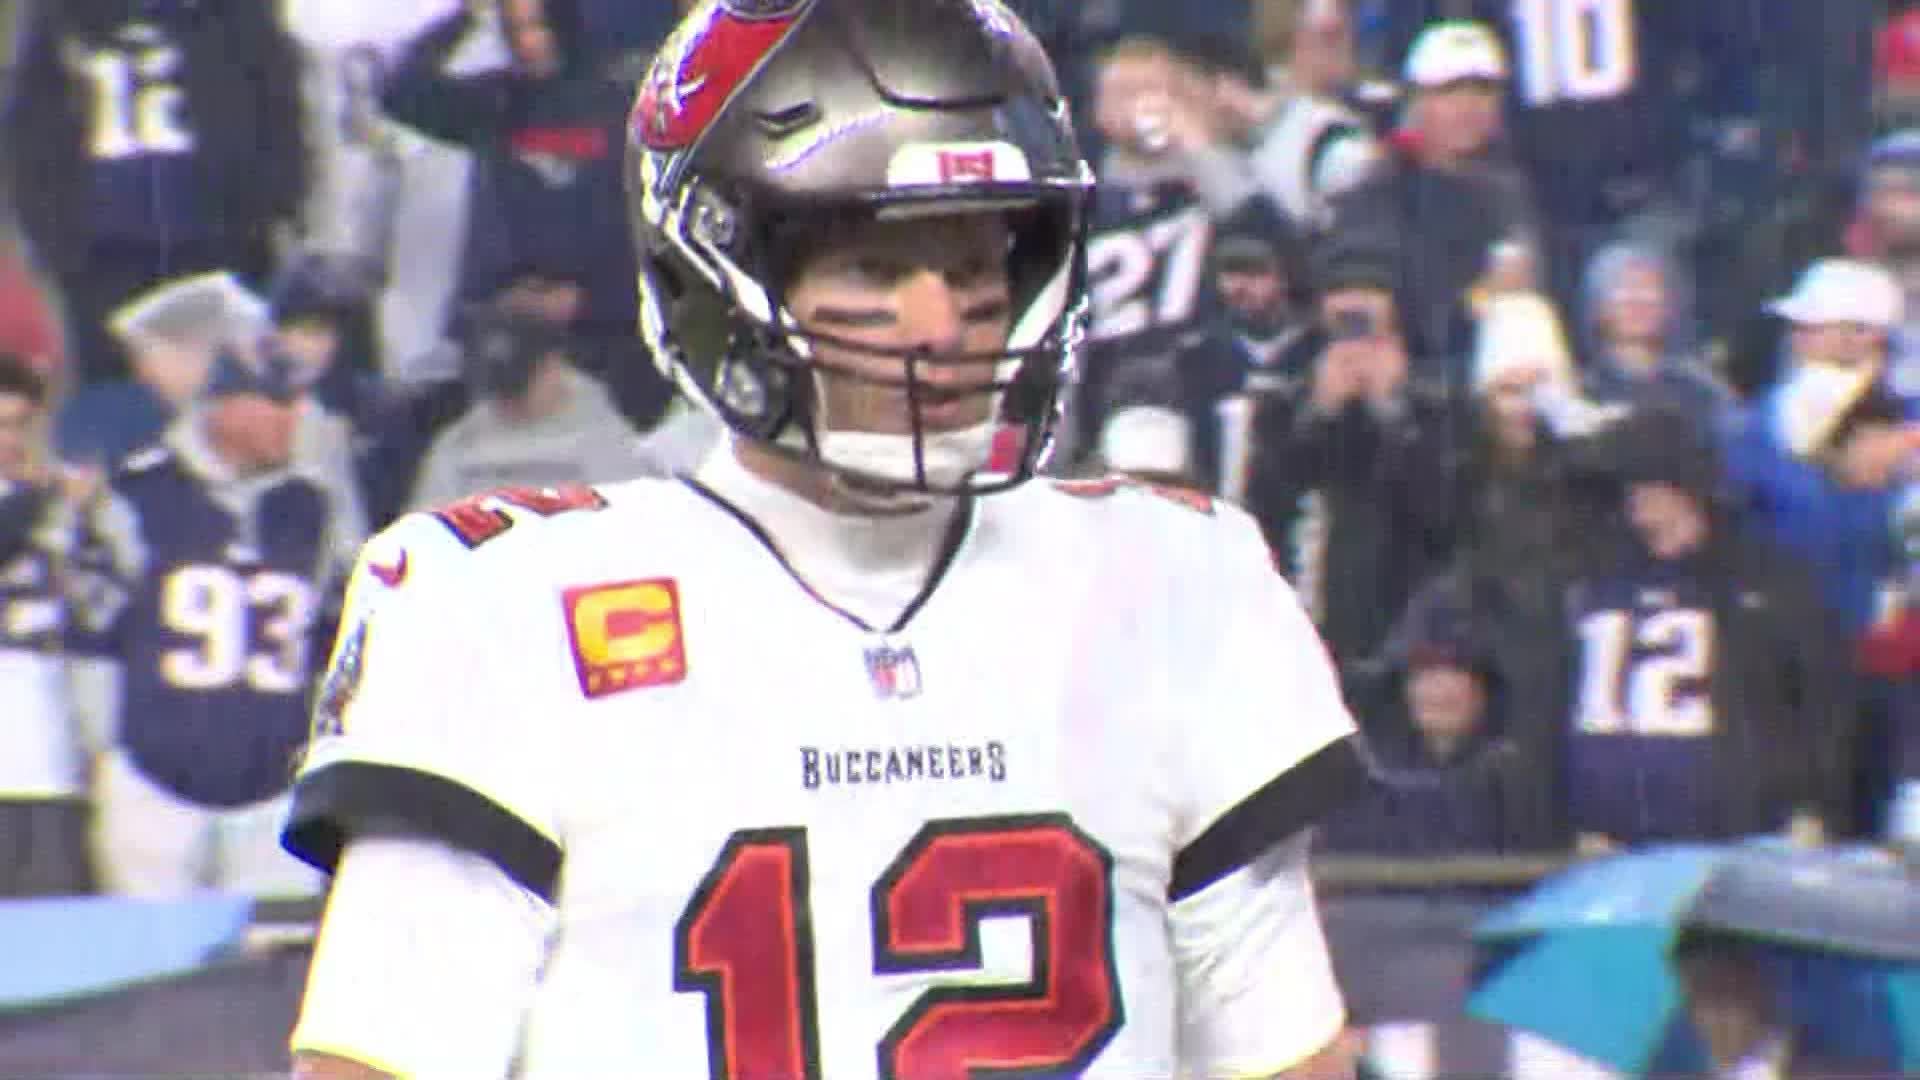 Bucs-Patriots pregame scene a Brady jersey bonanza